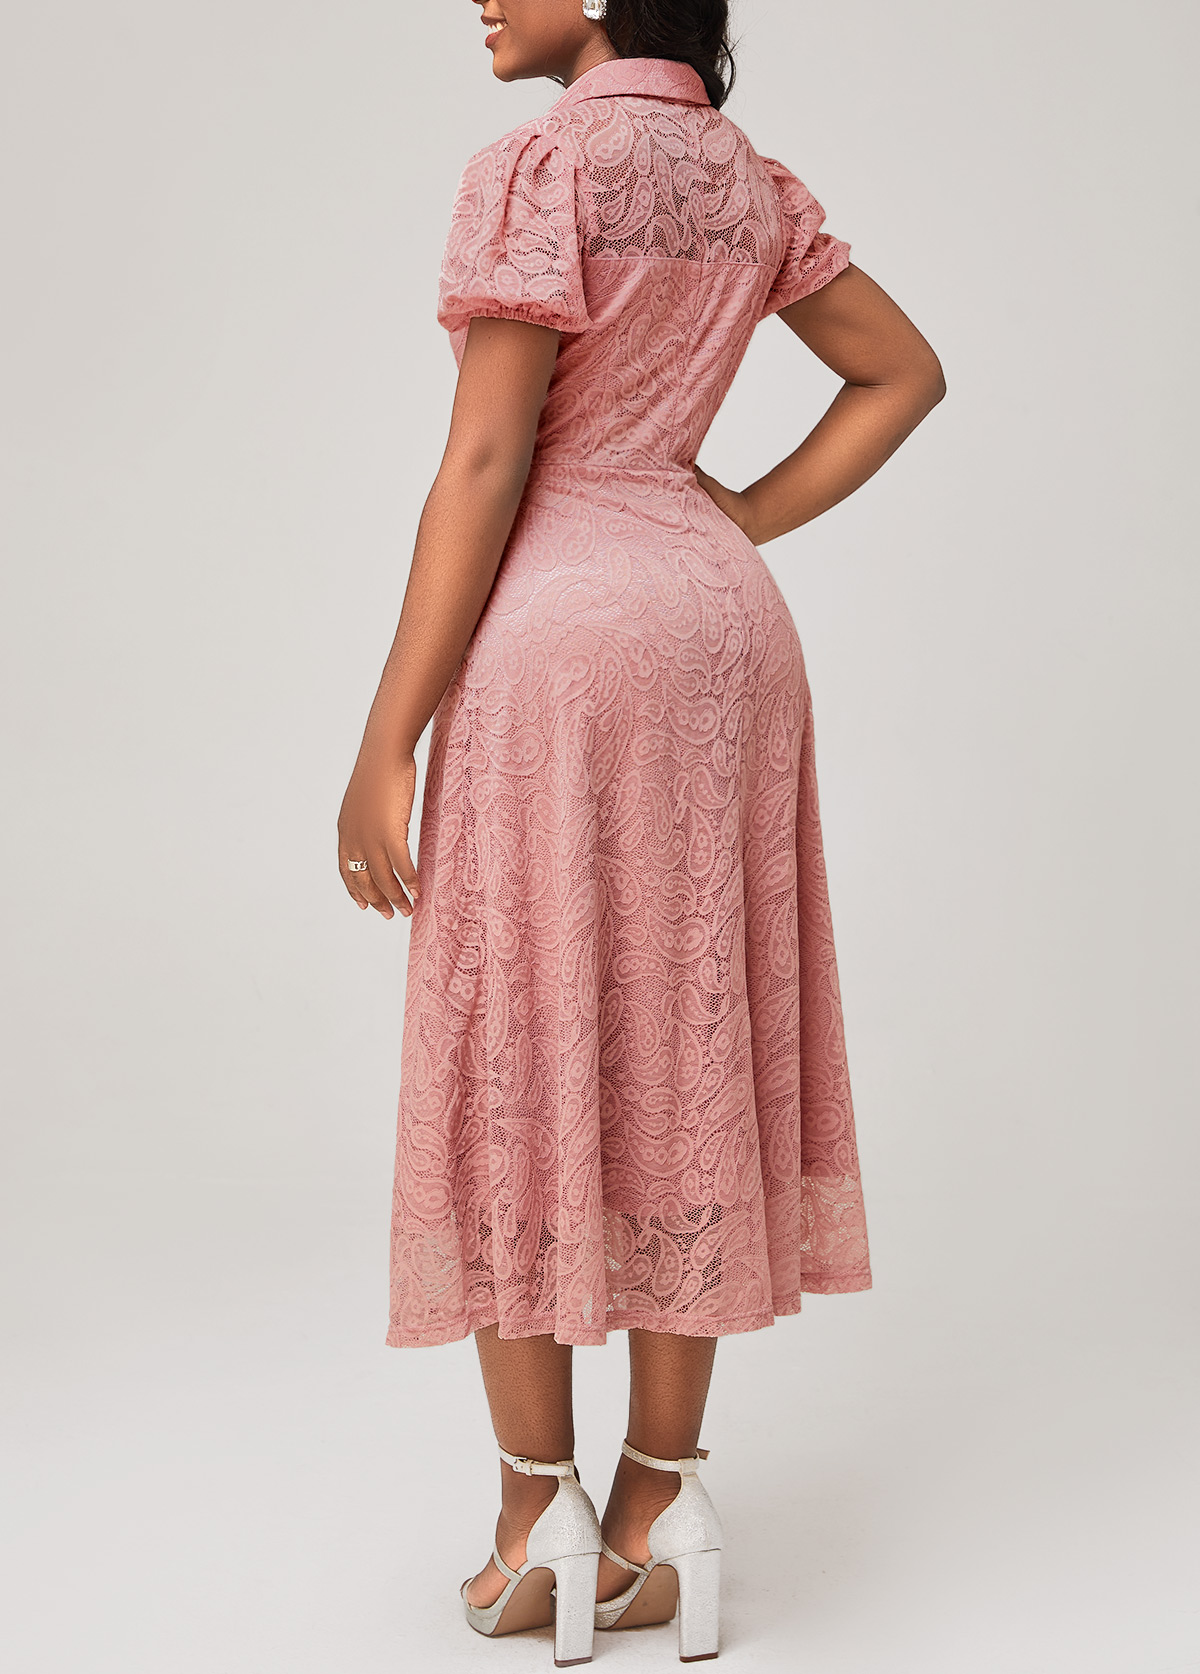 Dusty Pink Lace Short Sleeve Turndown Collar Dress